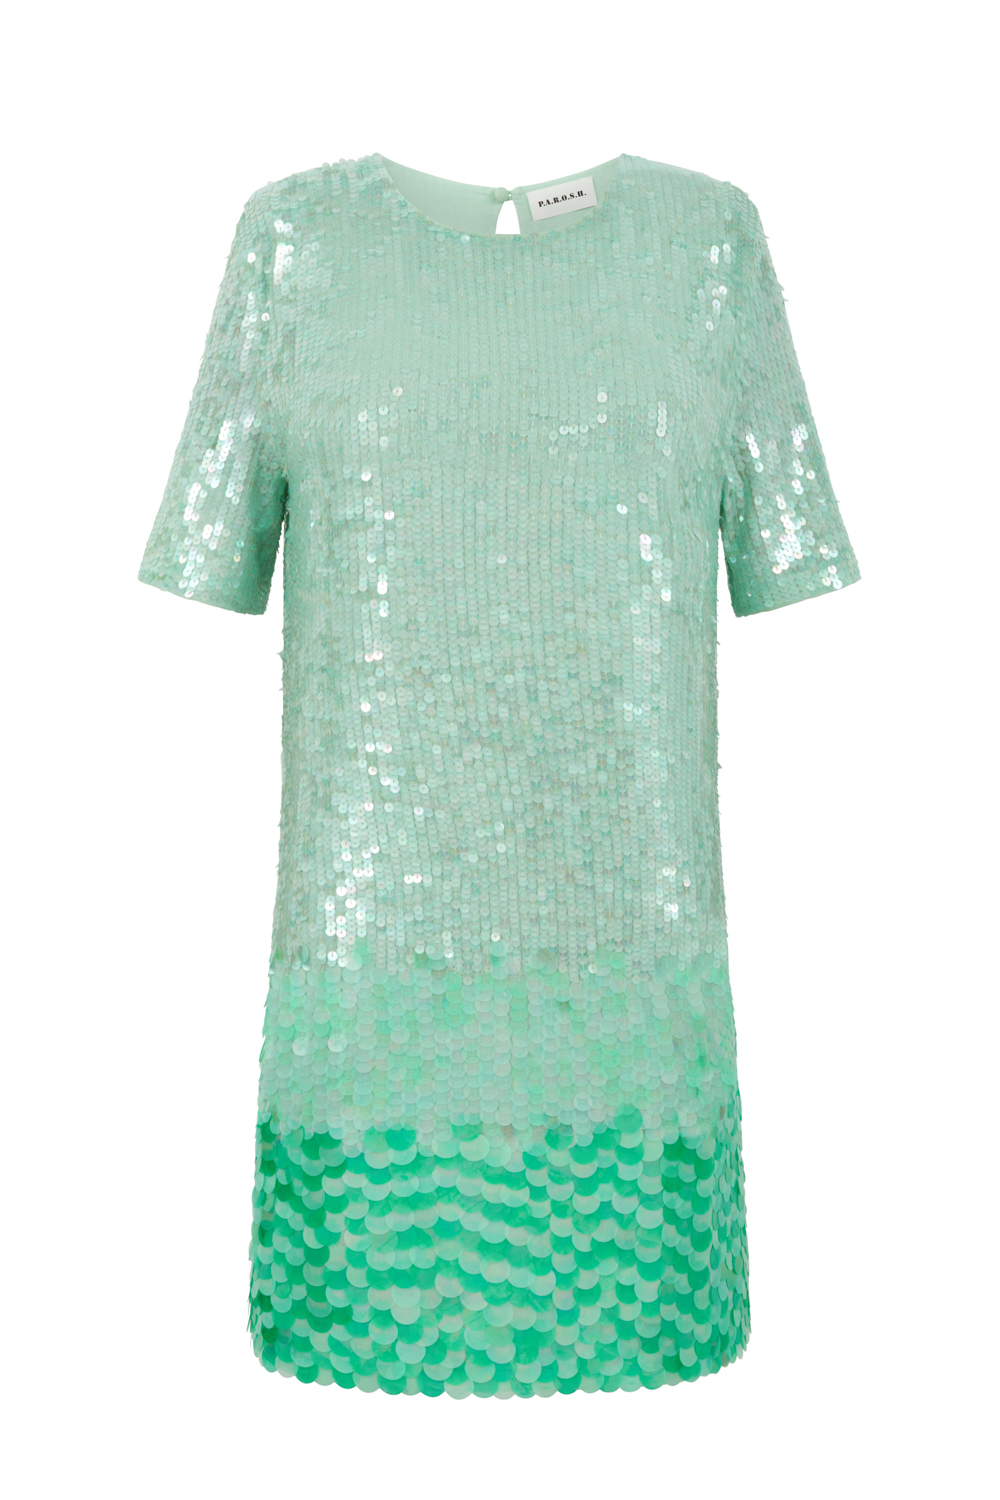 P.A.R.O.S.H. Gigi sequinned minidress - Green